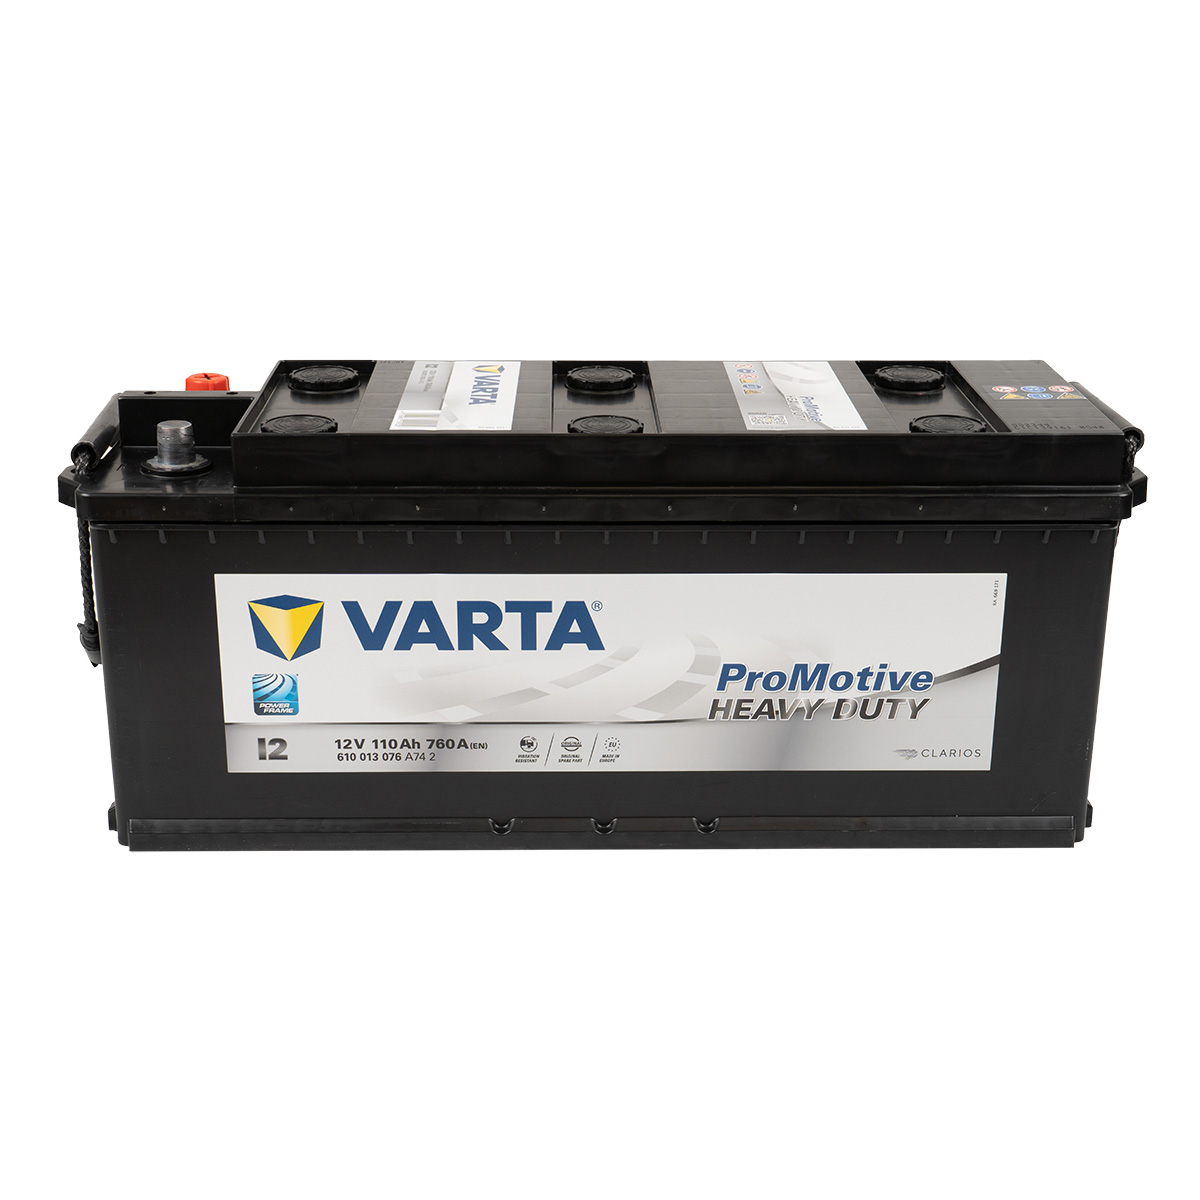 VARTA I2 ProMotive Heavy Duty 110Ah 760A LKW Batterie 610 013 076